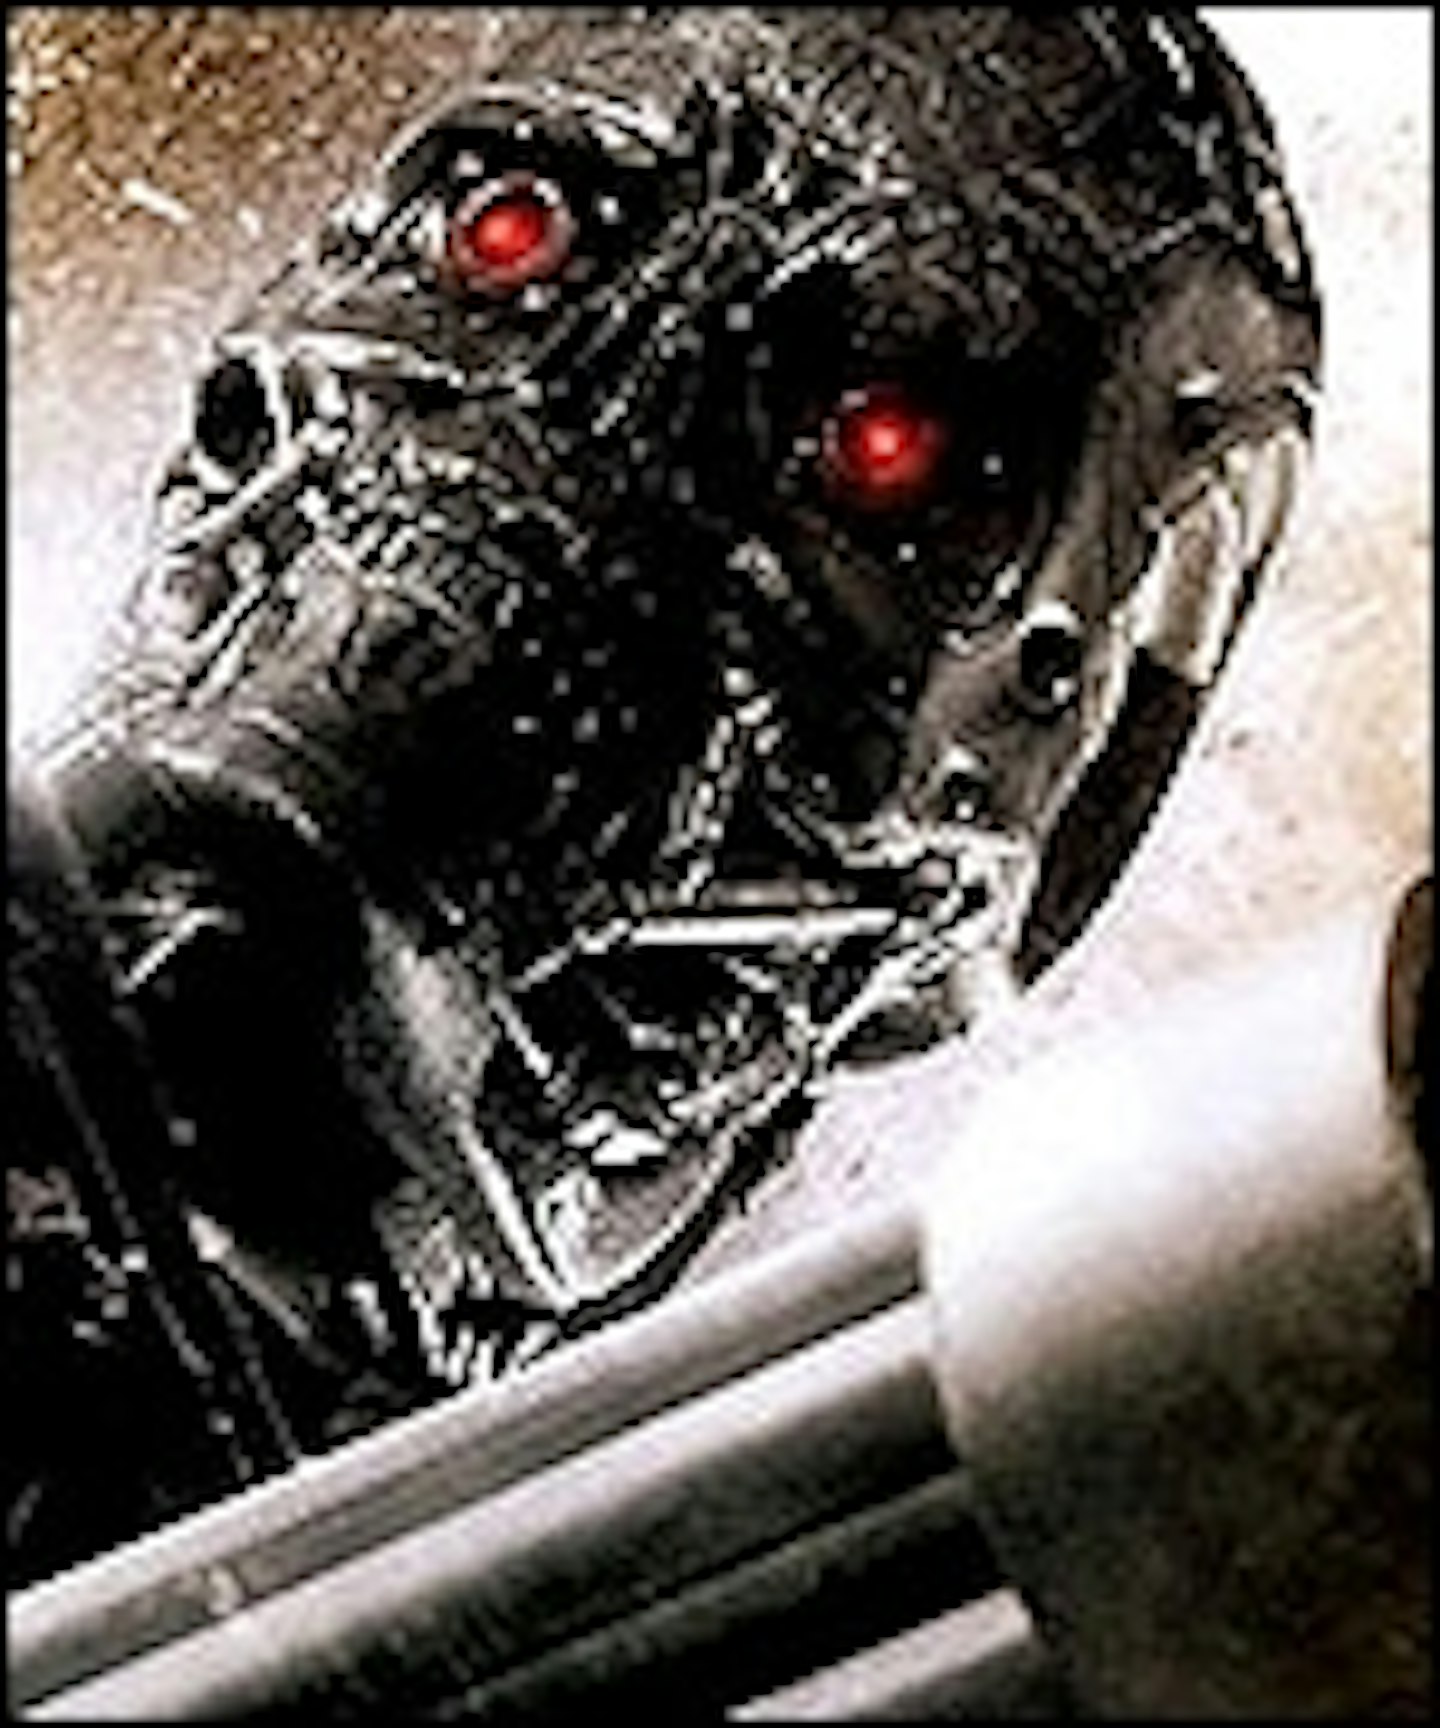 4-Minute Terminator Trailer Online